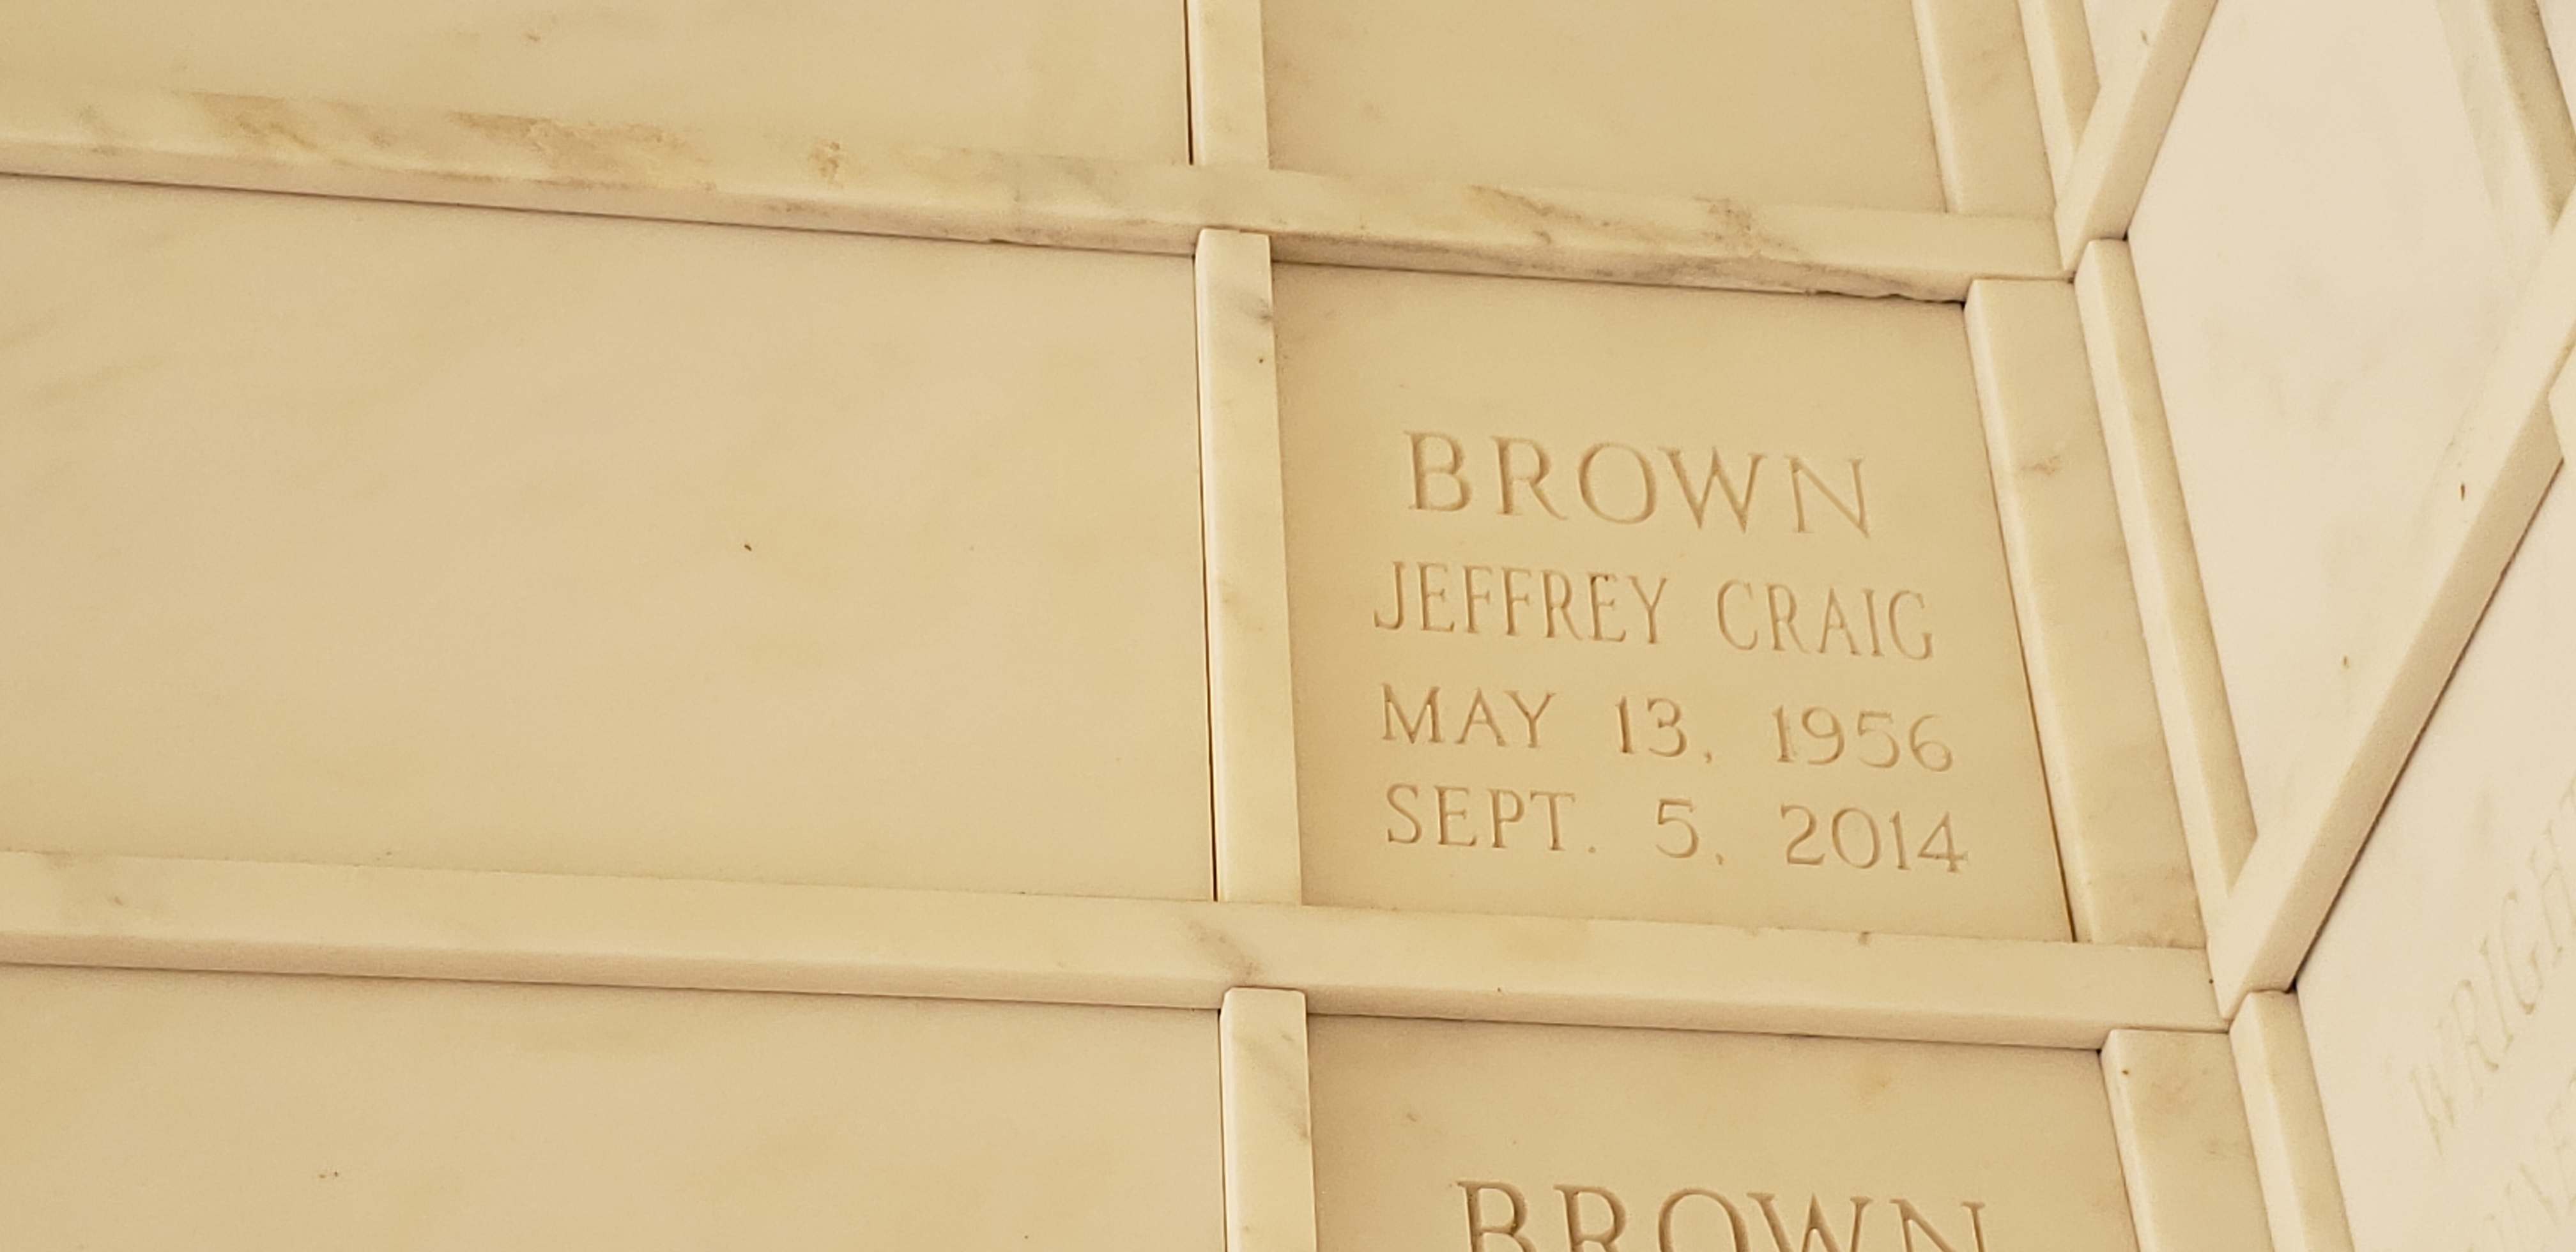 Jeffrey Craig Brown